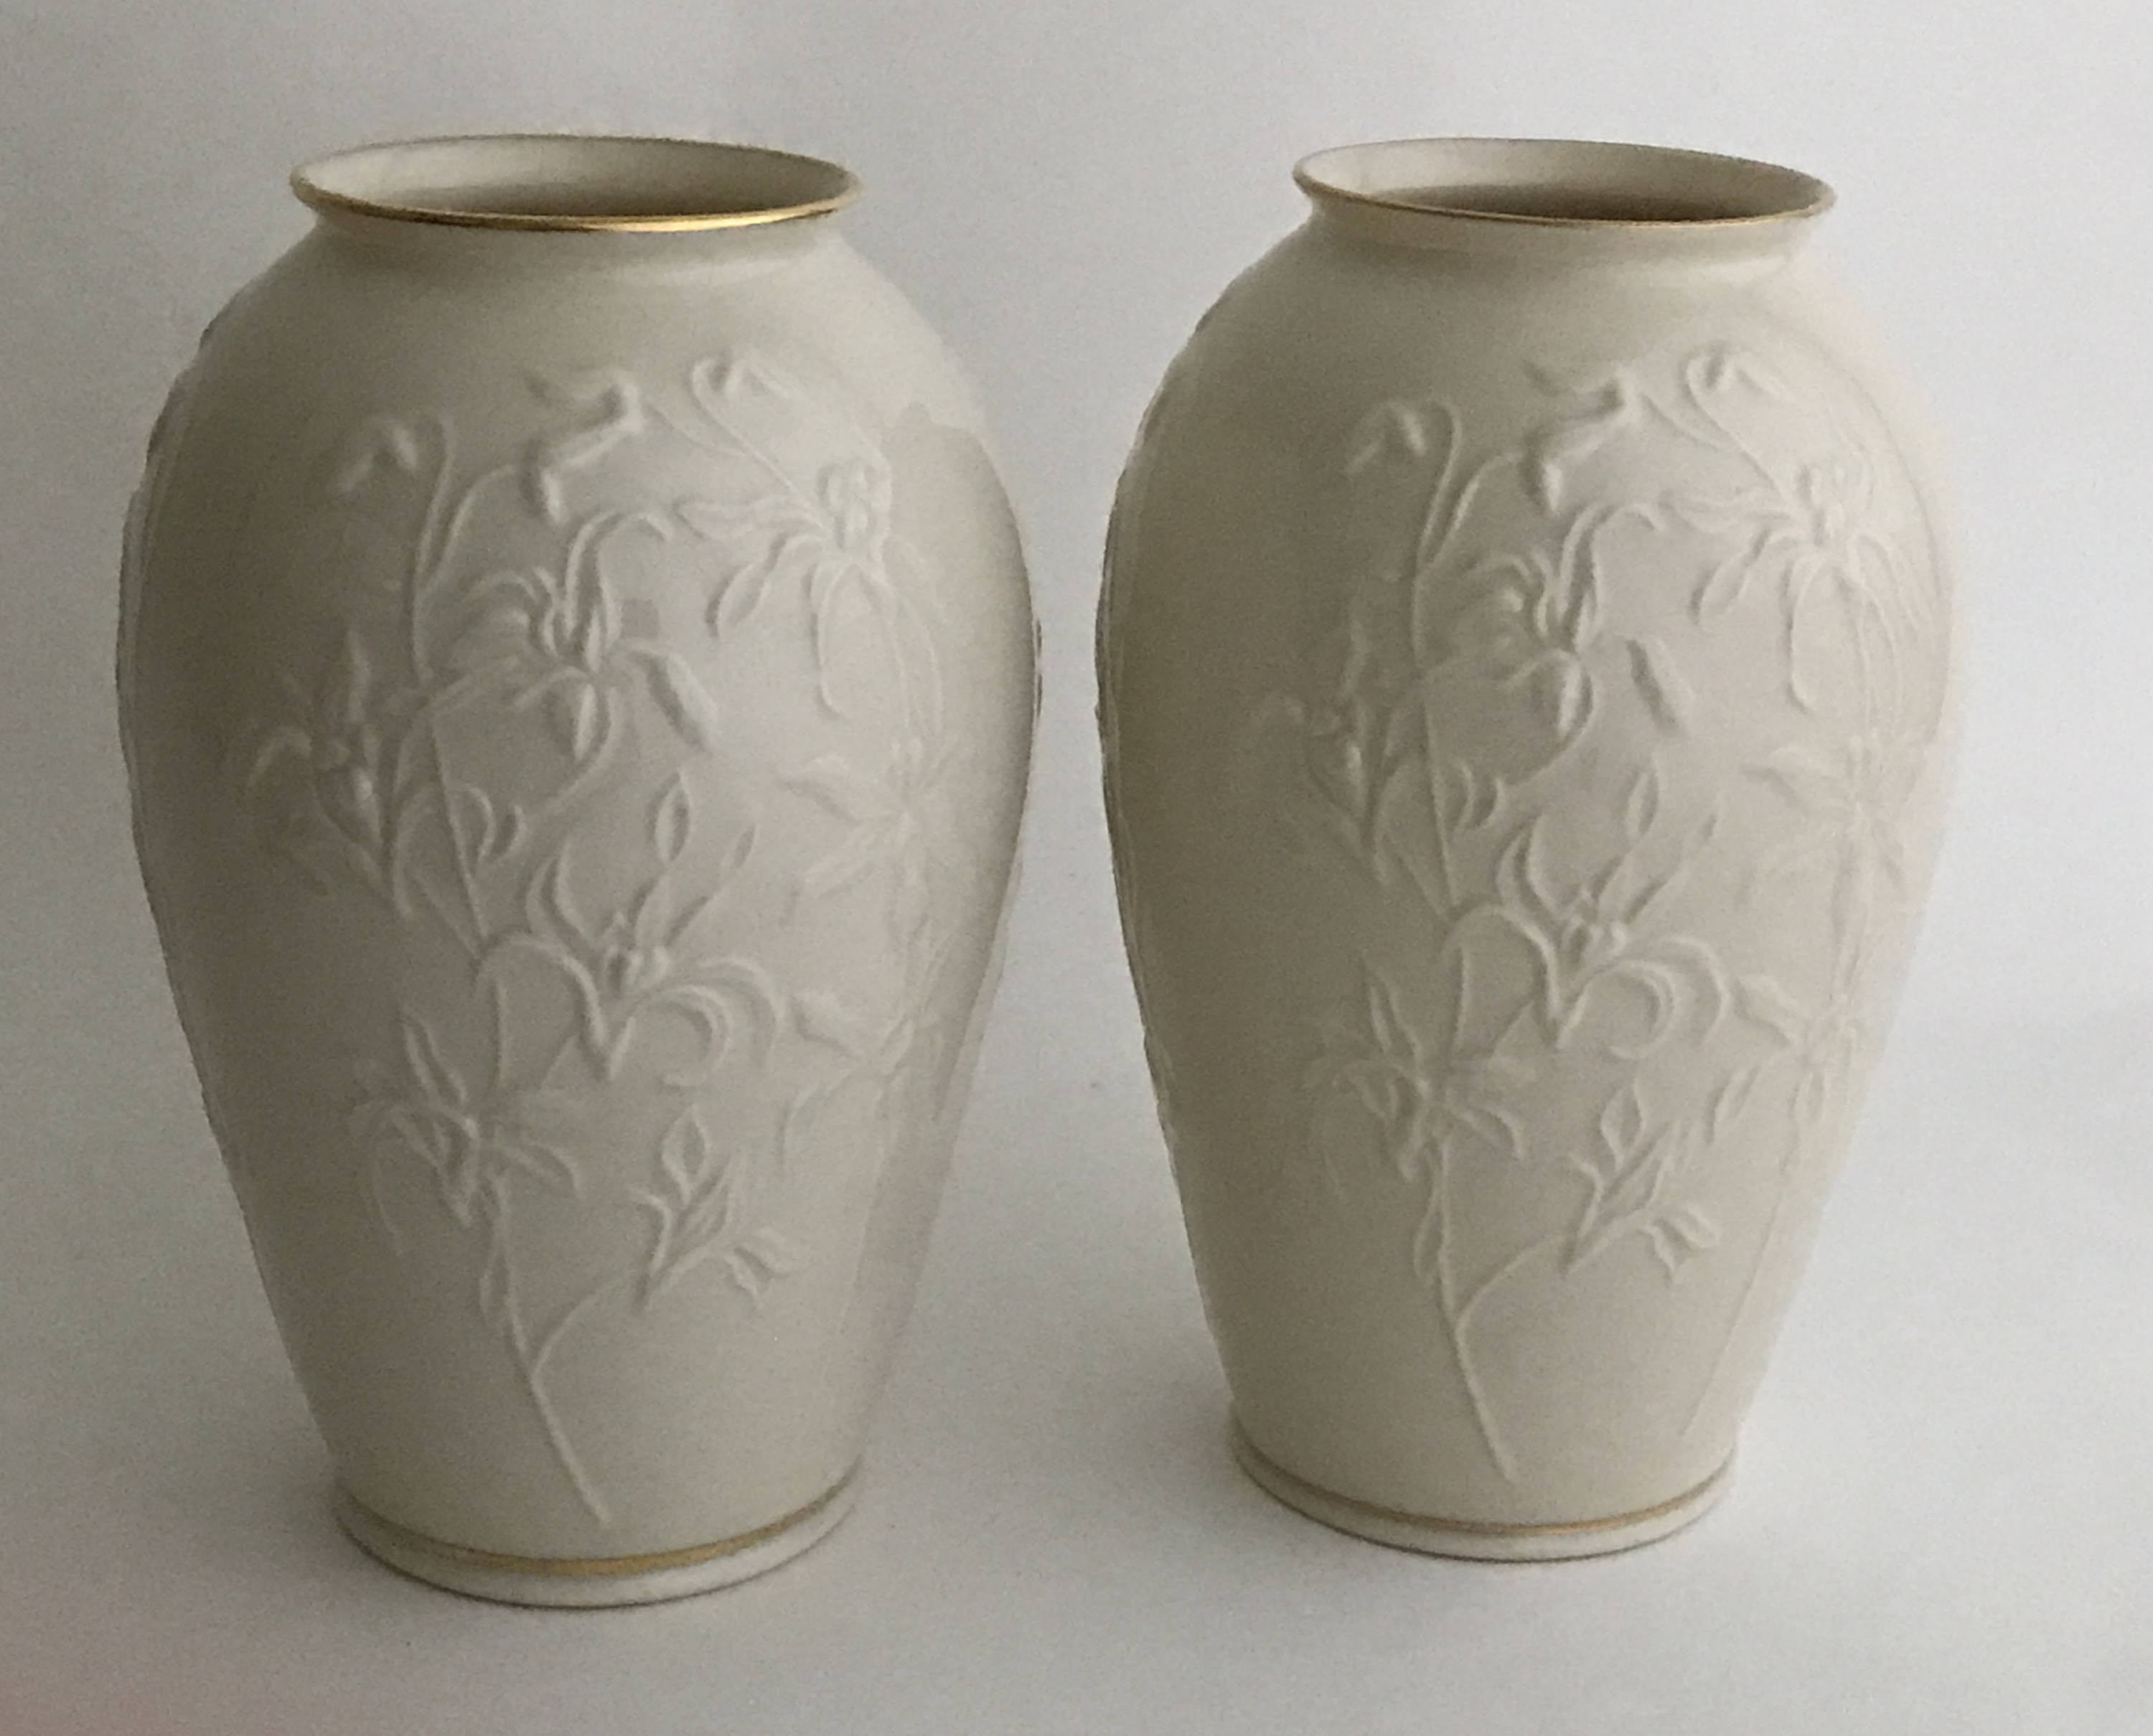 lenox crystal flower vase of lenox china vase vintage lenox vase centennial vase etsy within image 8